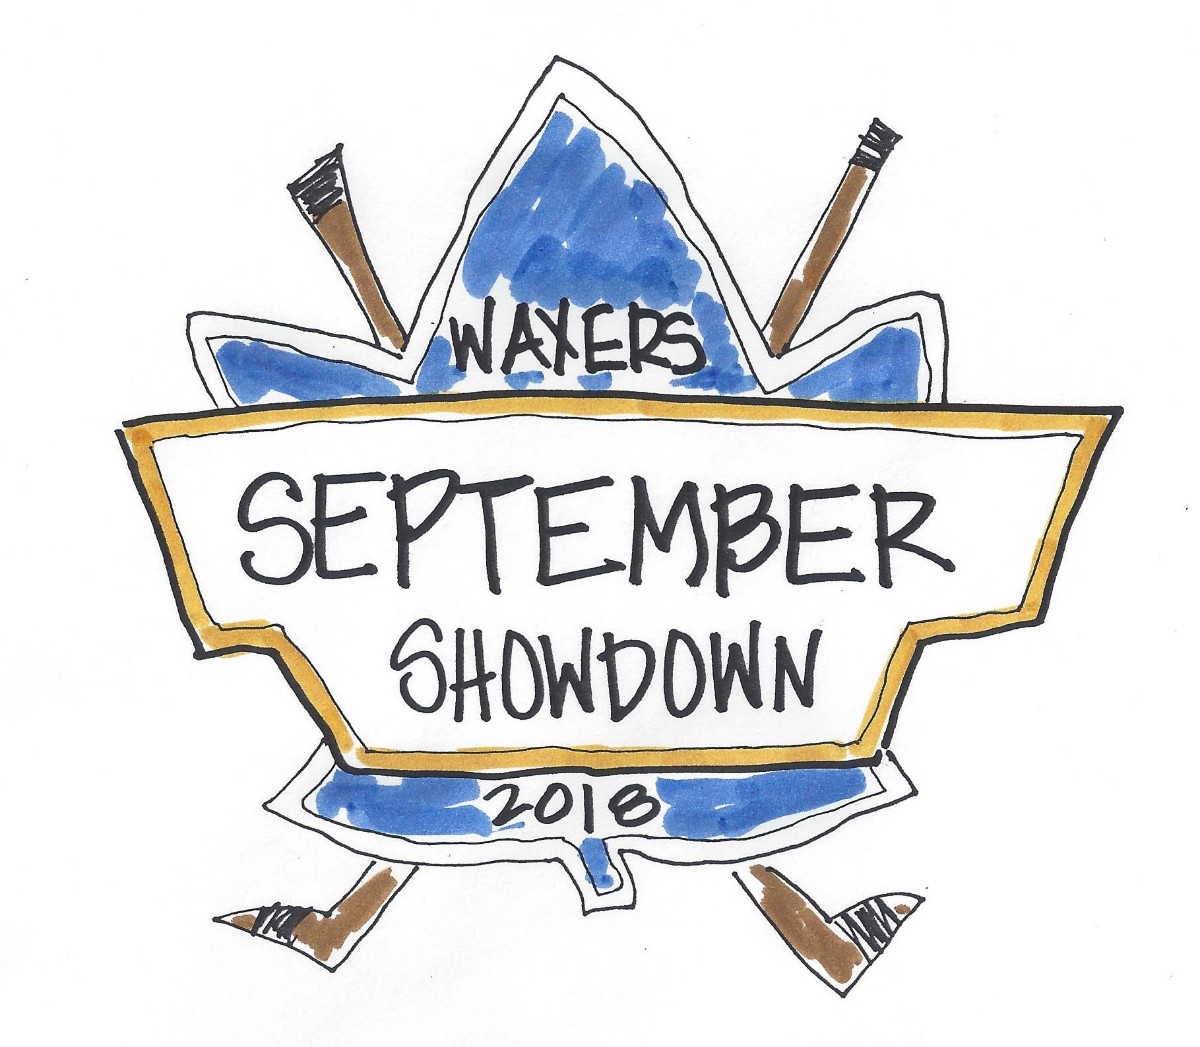 Waxers September Showdown